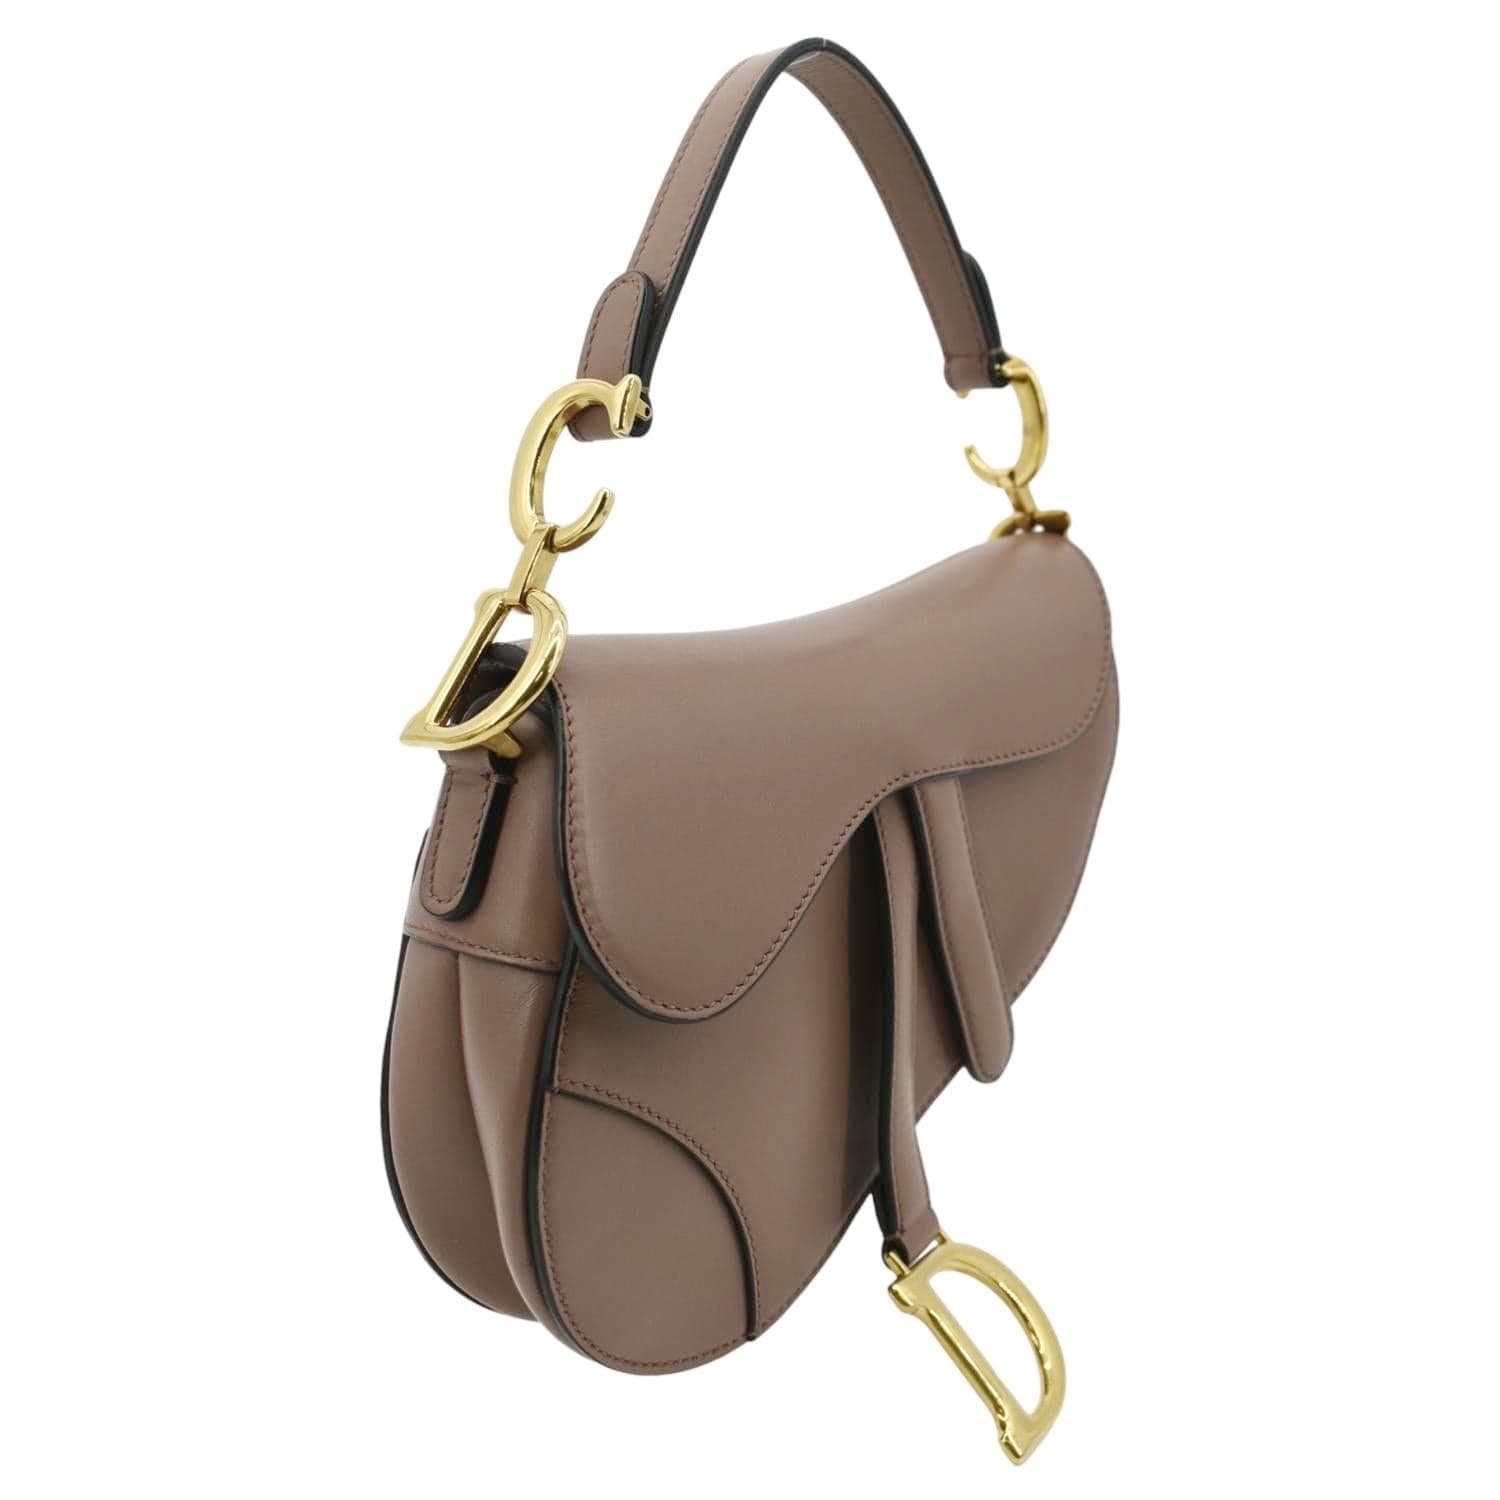 Dior Women's Bags & Handbags, Authenticity Guaranteed